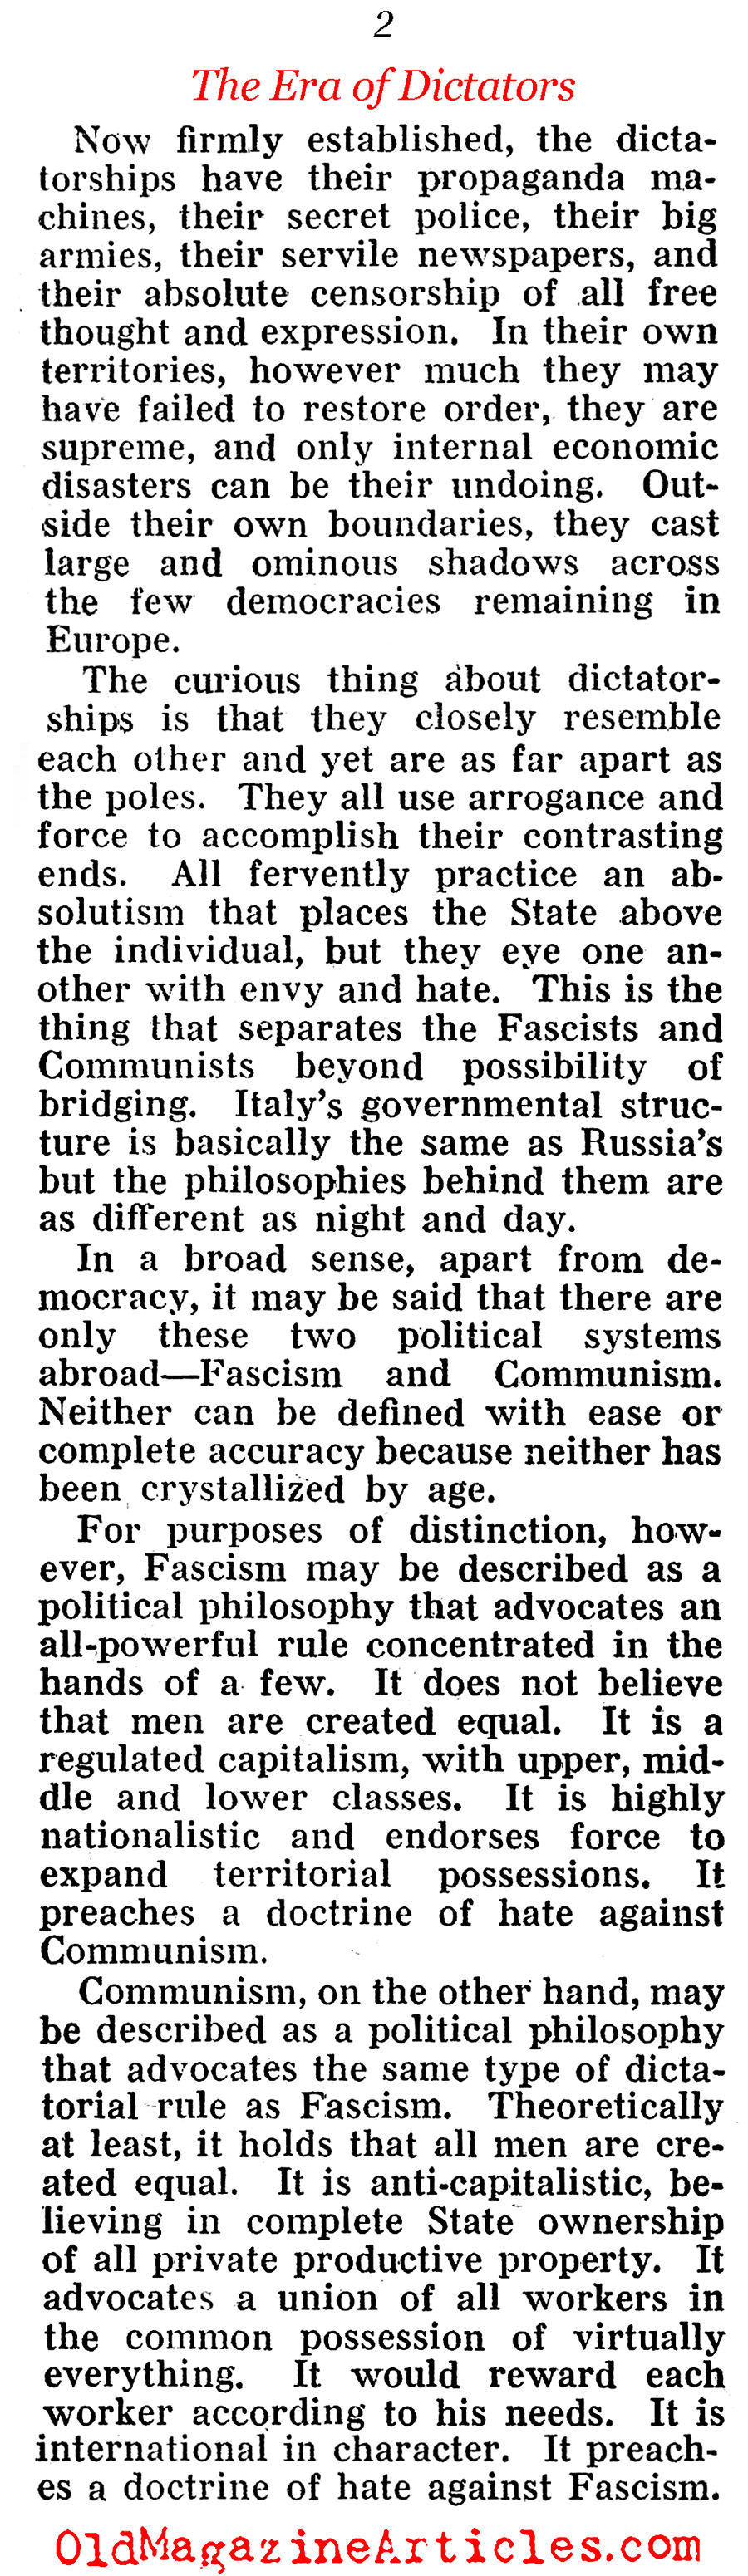 The Era of the Dictators (Pathfinder Magazine, 1937)